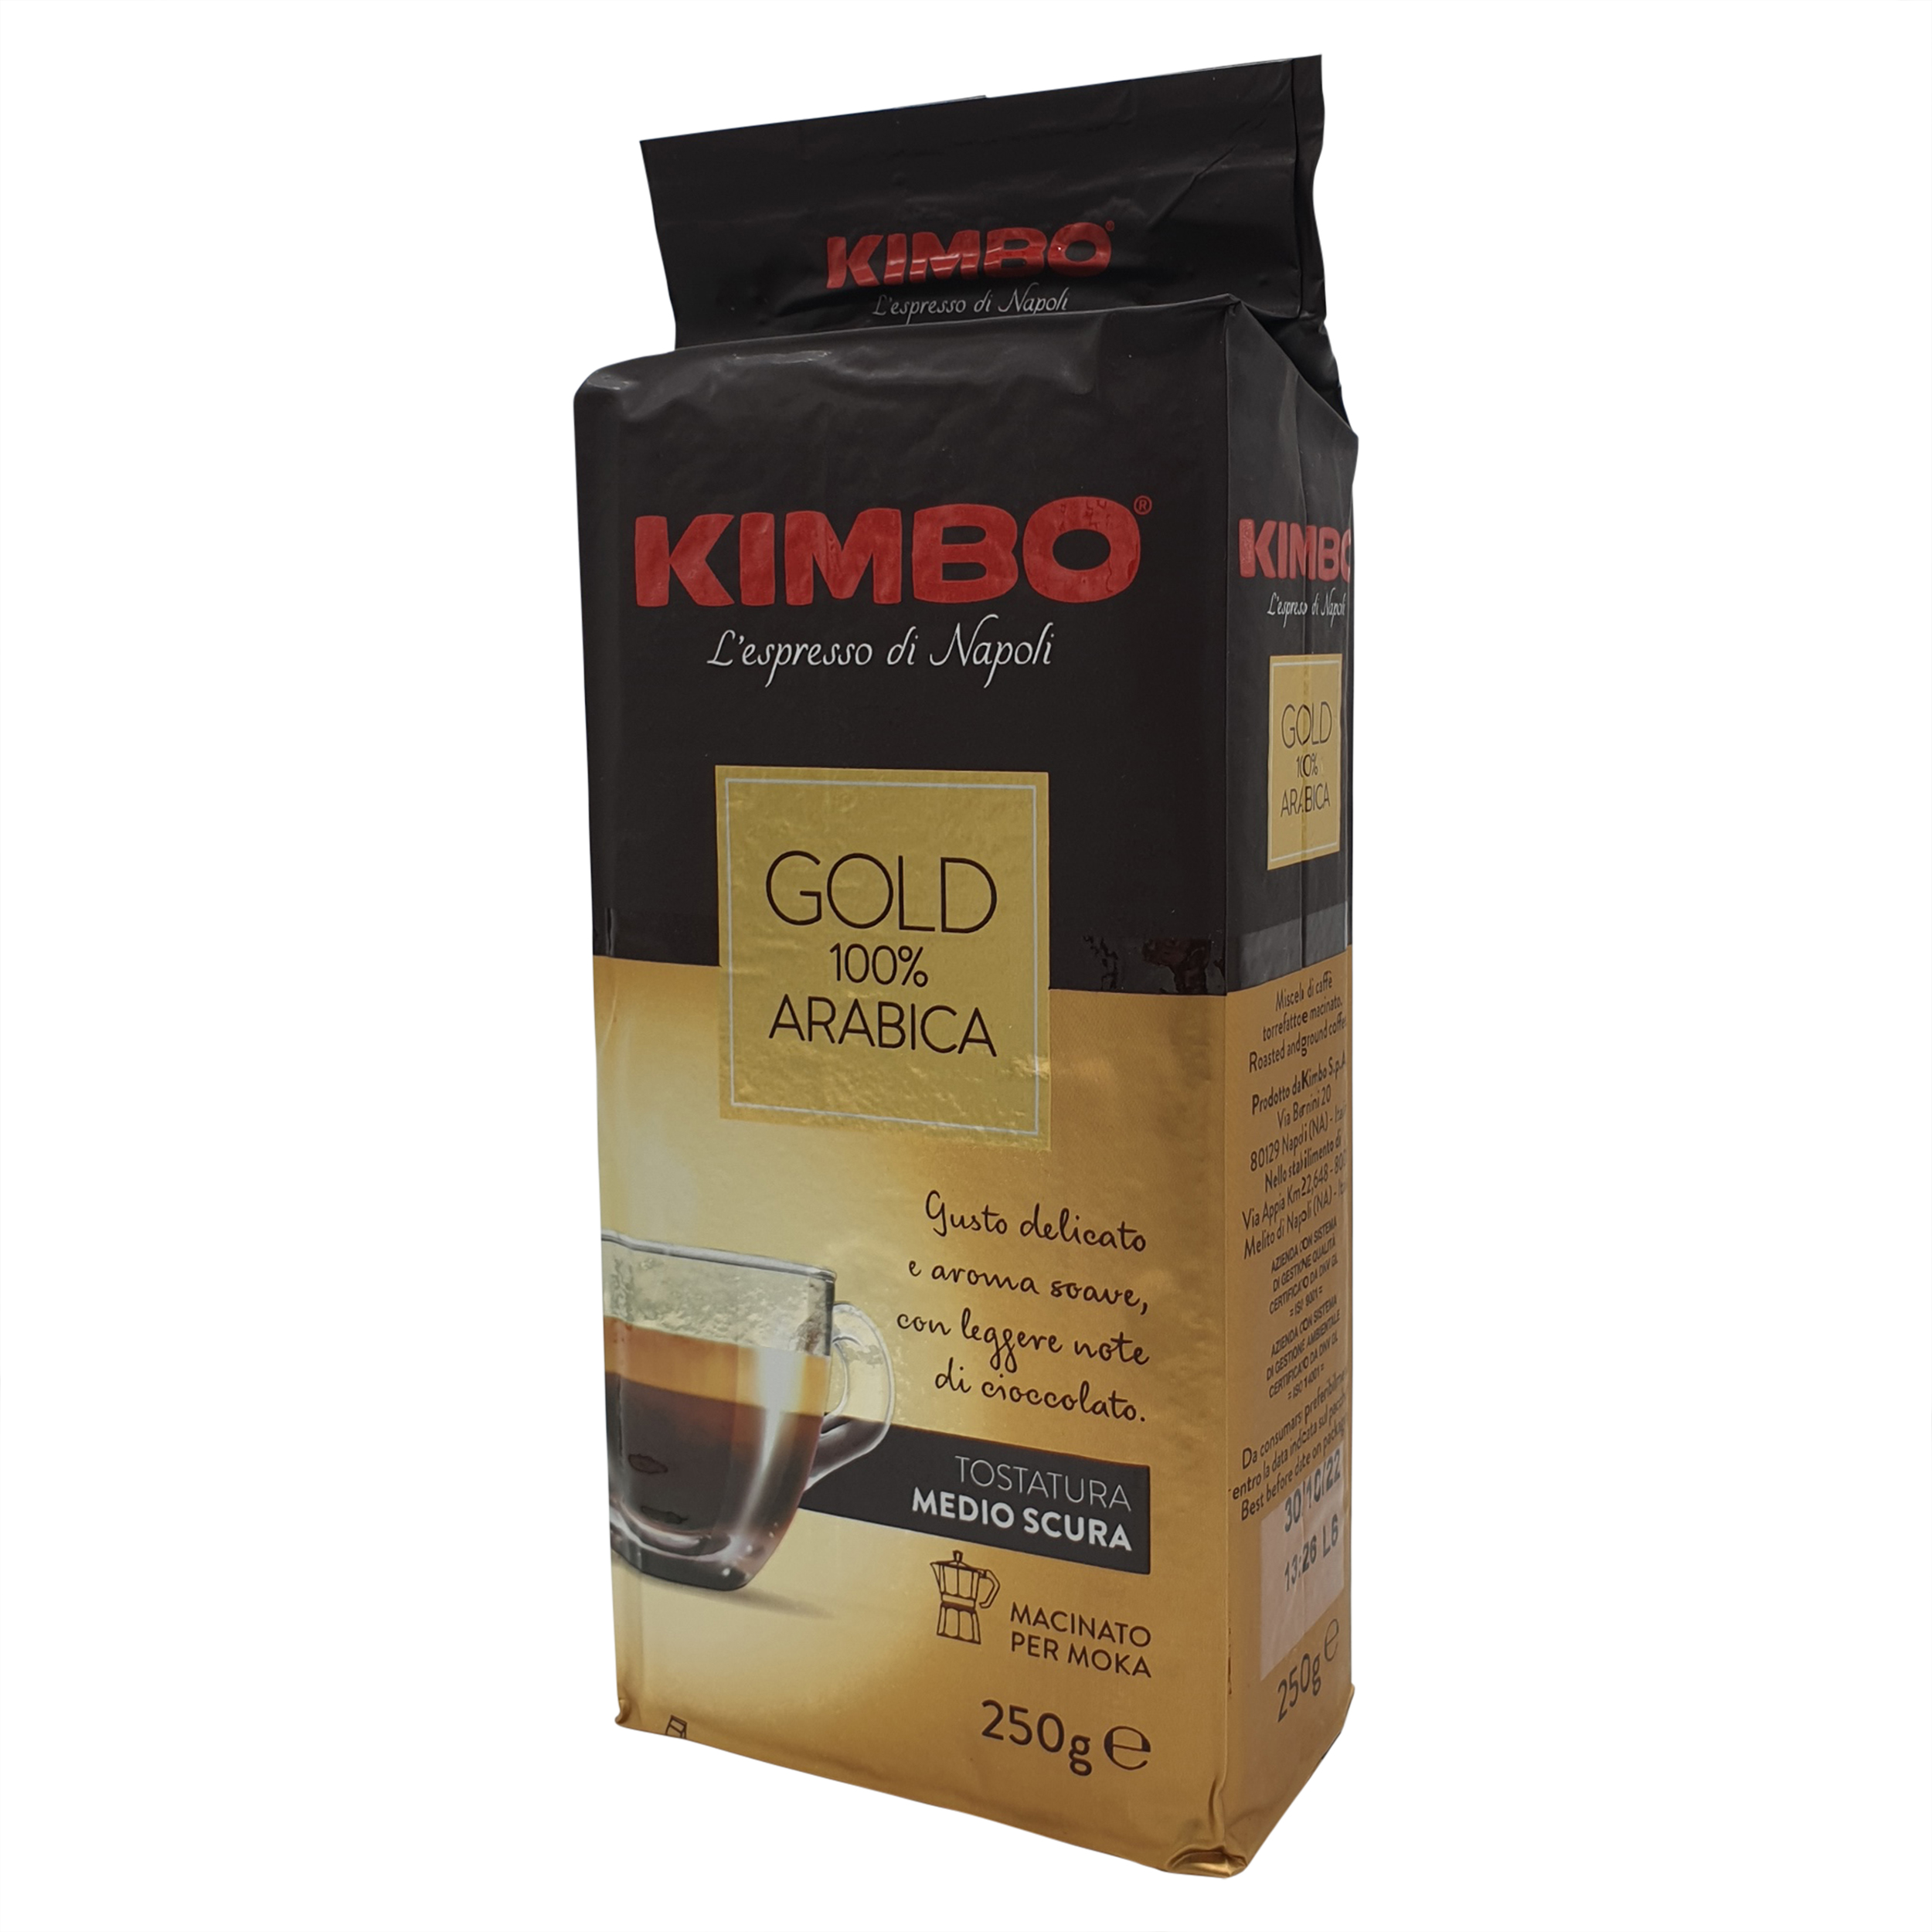 Kimbo Espresso, Kimbo Gold, Kimbo, Gold 100% Arabica 250 G, Kimbo